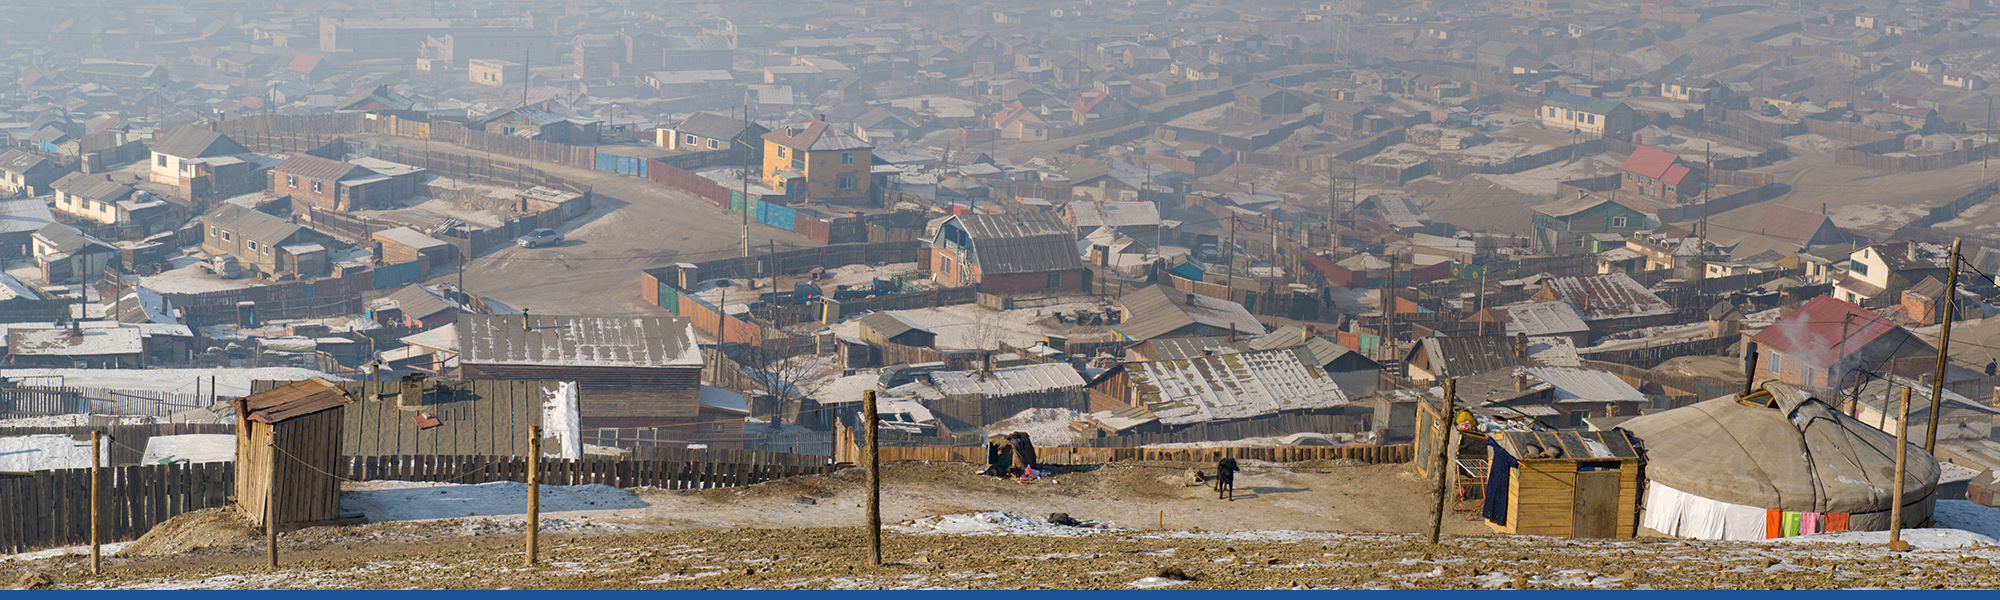 Smog settling over a mongolian town